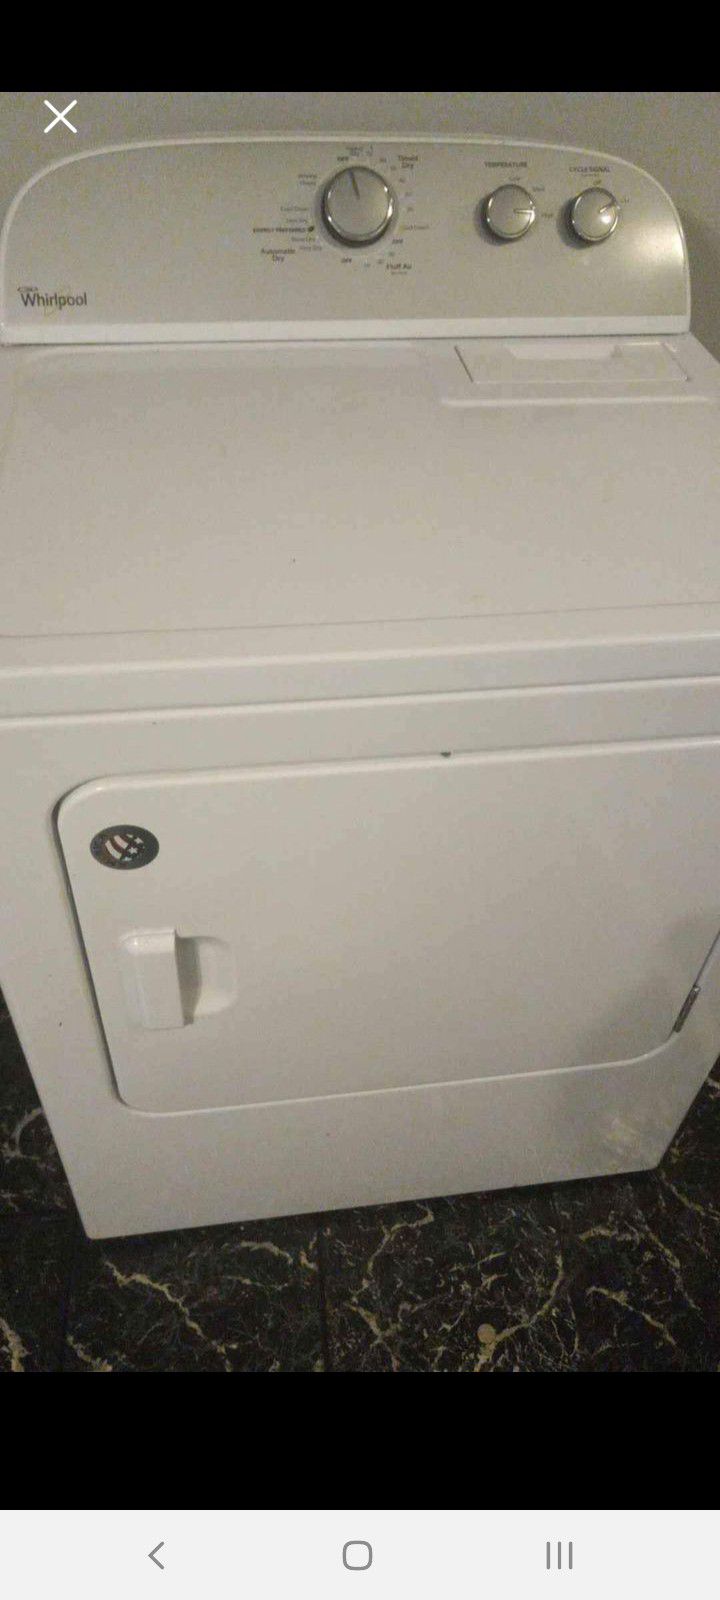 Super Capacity Whirlpool Dryer